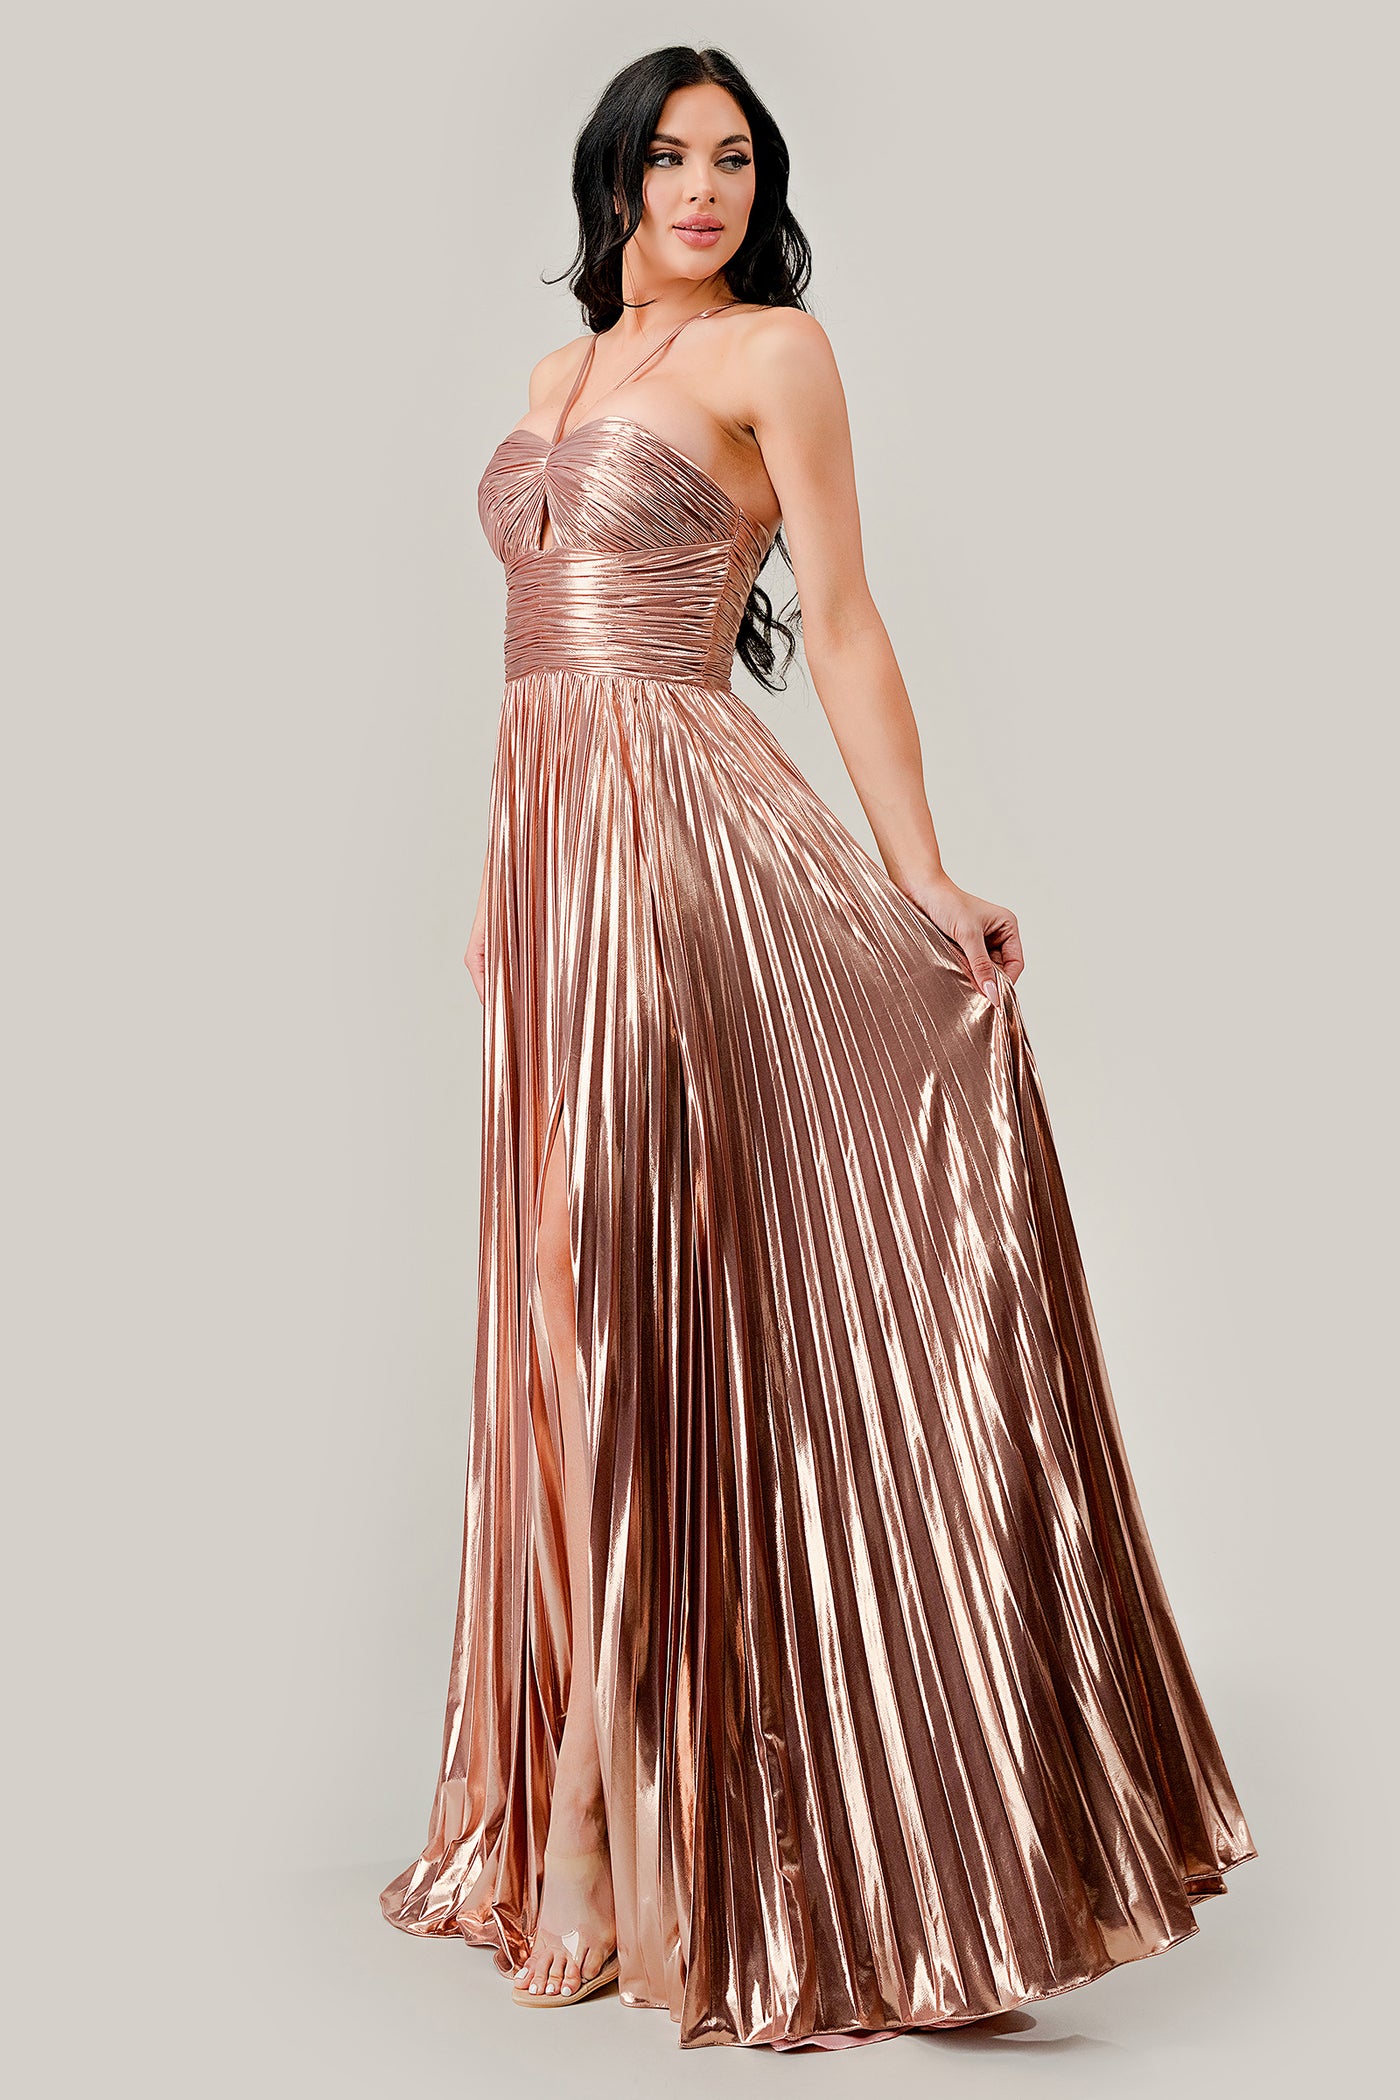 Cinderella Divine C153 B Chic Fashions Long Dress Evening Gowns